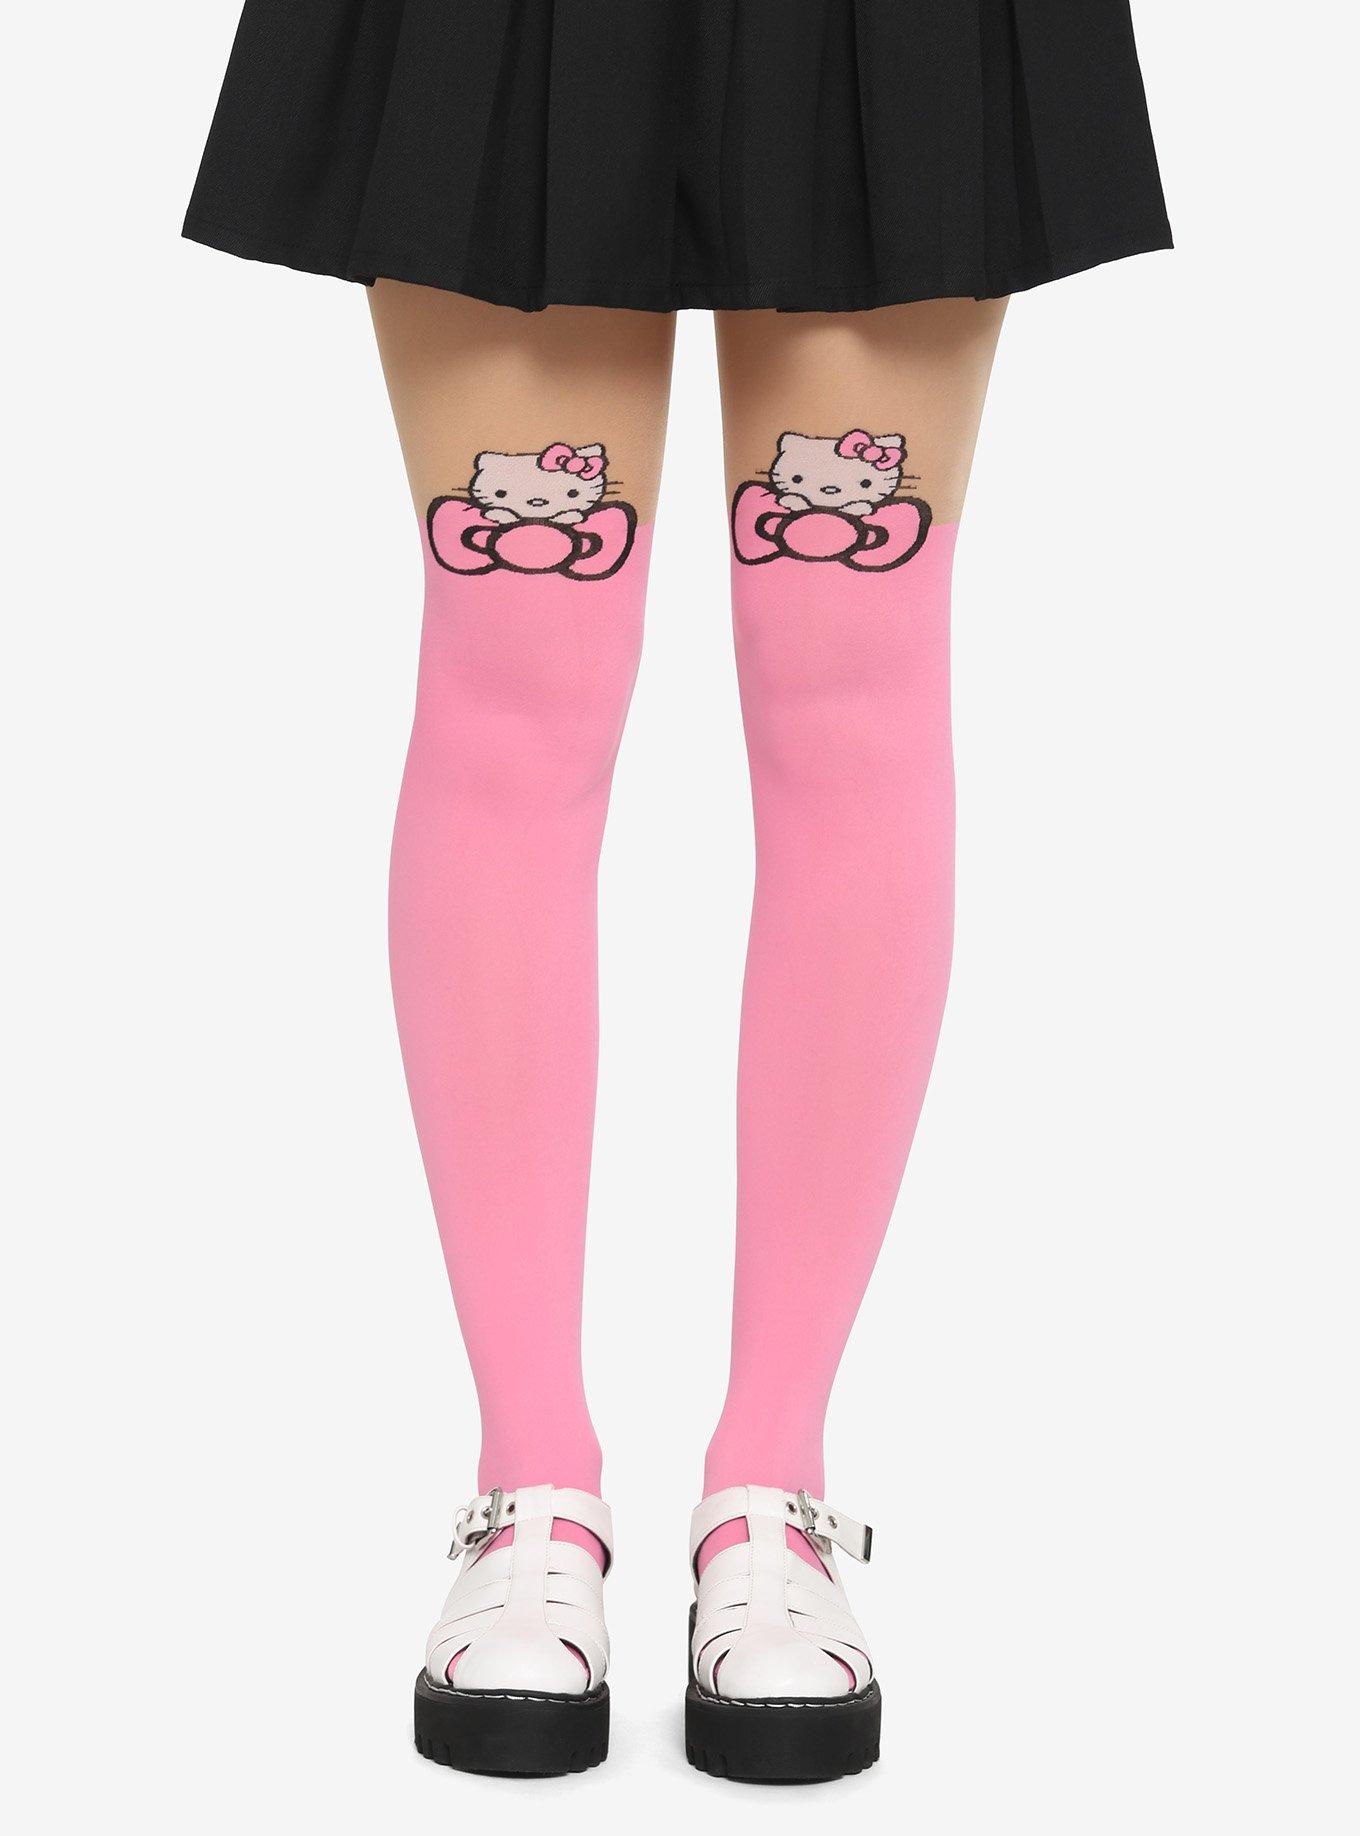 Barbie Pink Thigh High Stockings 